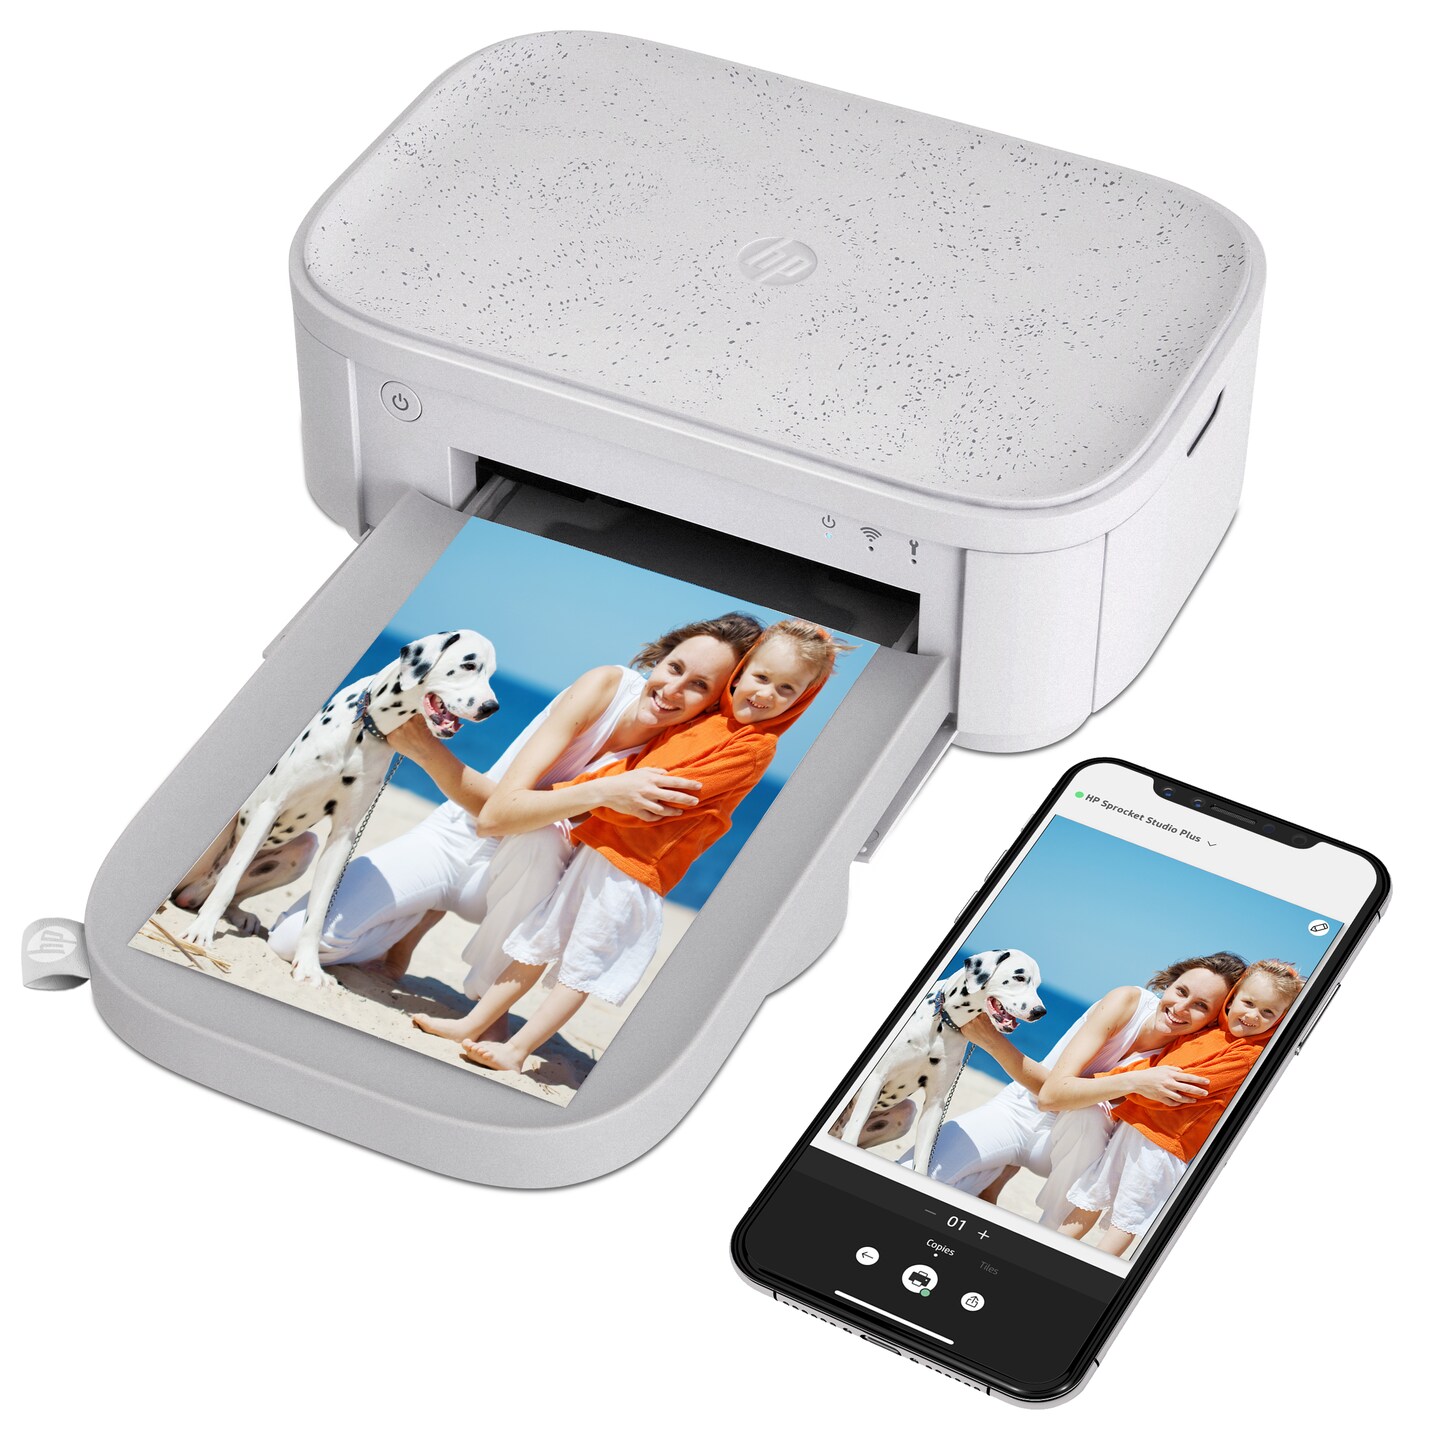 Sprocket plus home color photo printer mini portable handheld photo printer  inkless printing sprocket plus Bluetooth connection - AliExpress